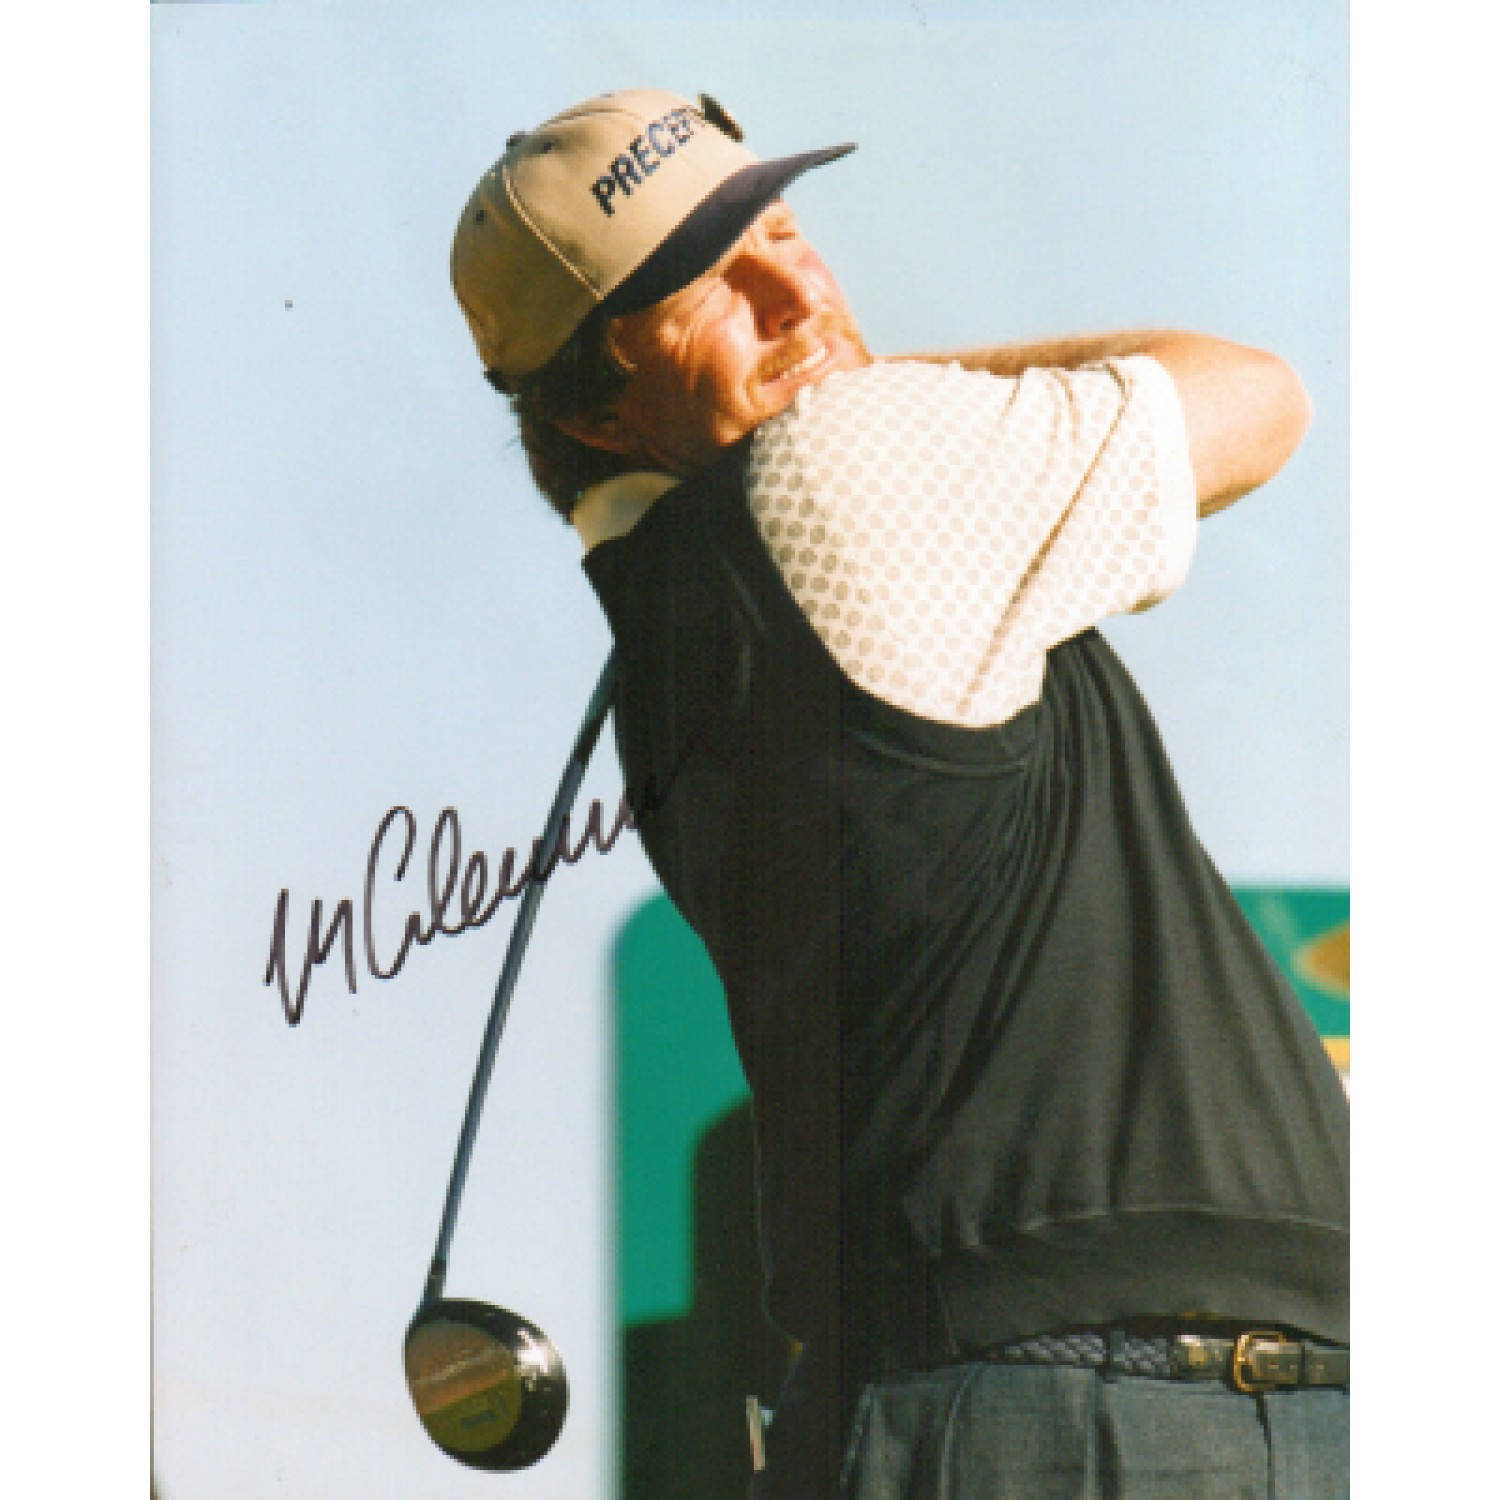 Professional golfer Mark Calcavecchia in a sunlit shot, looking focused in a brown cap. Wallpaper